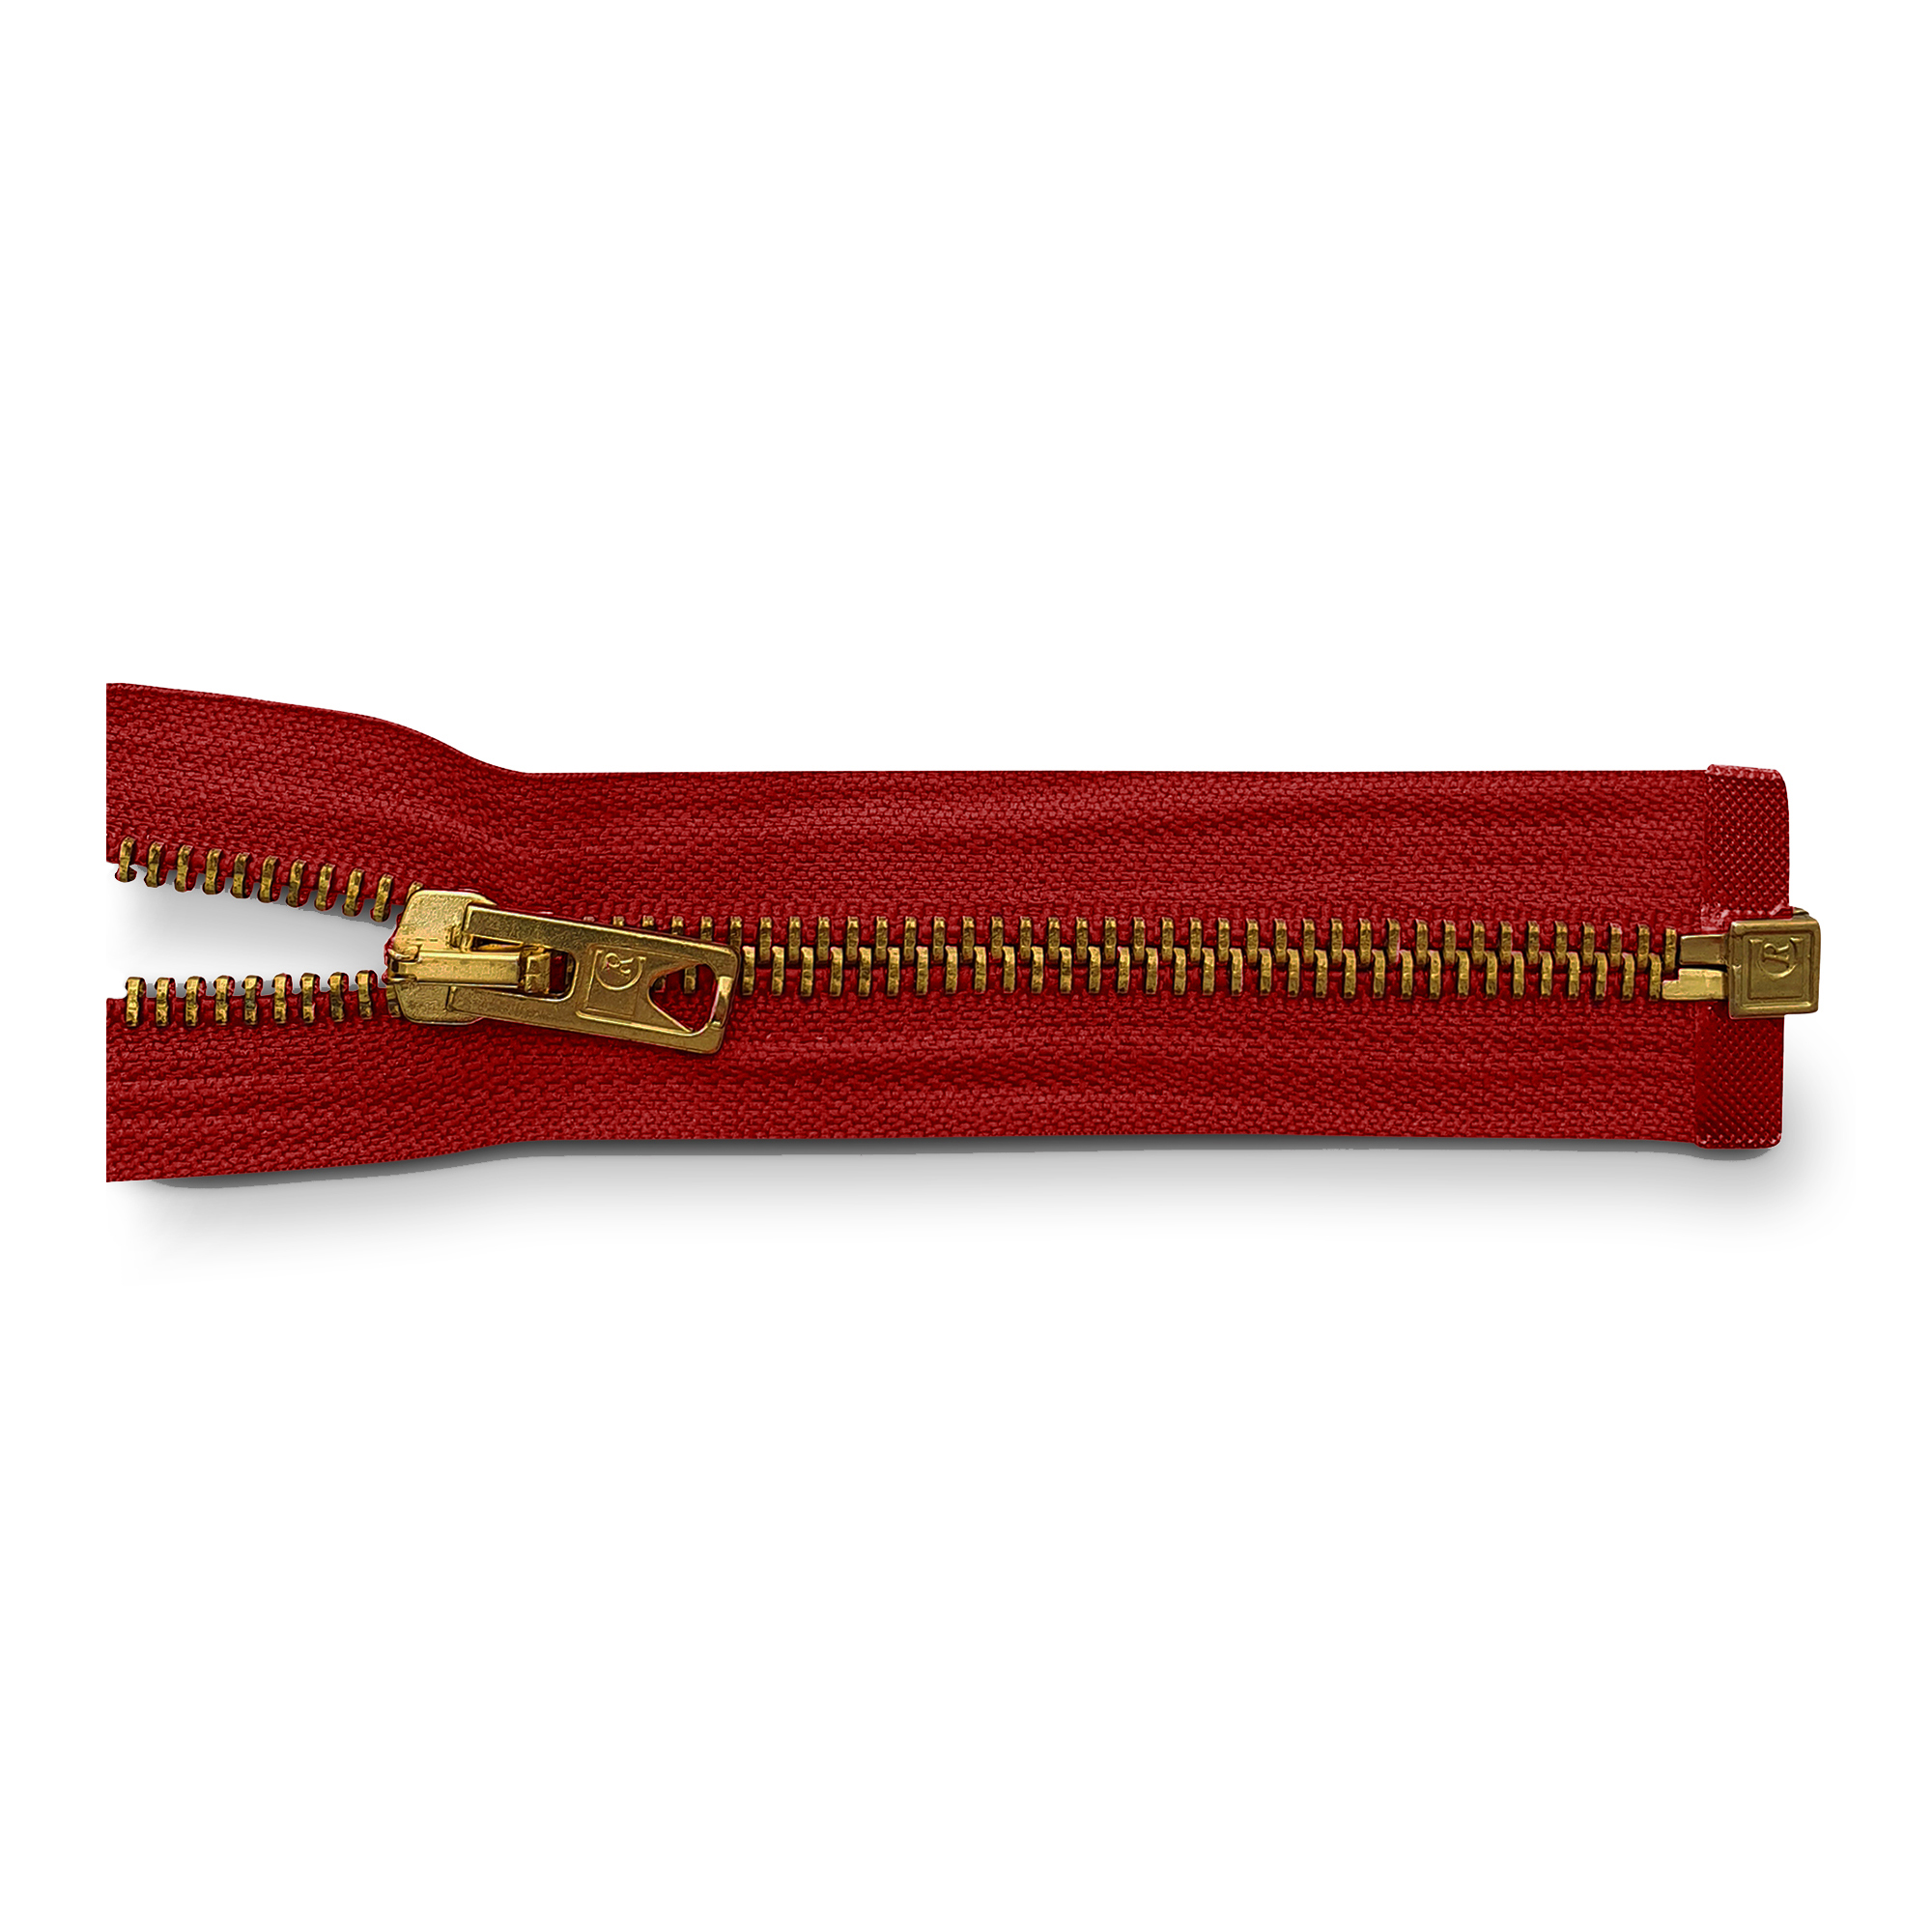 Reißverschluss 80cm, teilbar, Metall goldf. breit, rot, hochwertiger Marken-Reißverschluss von Rubi/Barcelona